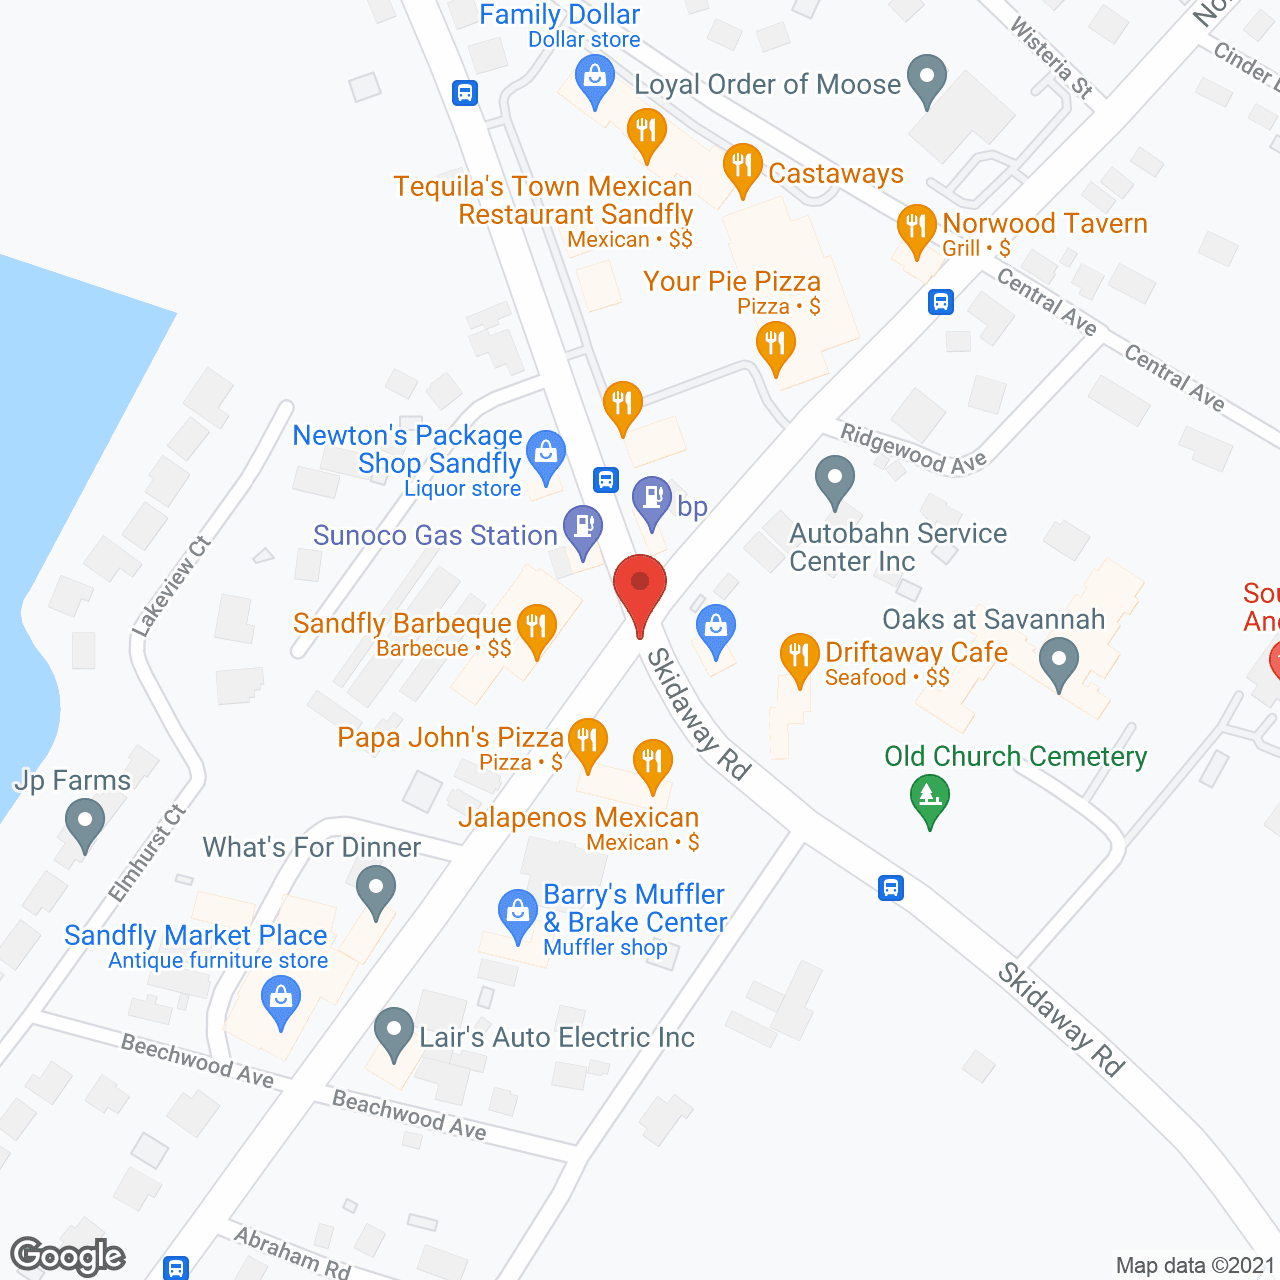 Oaks at Savannah in google map